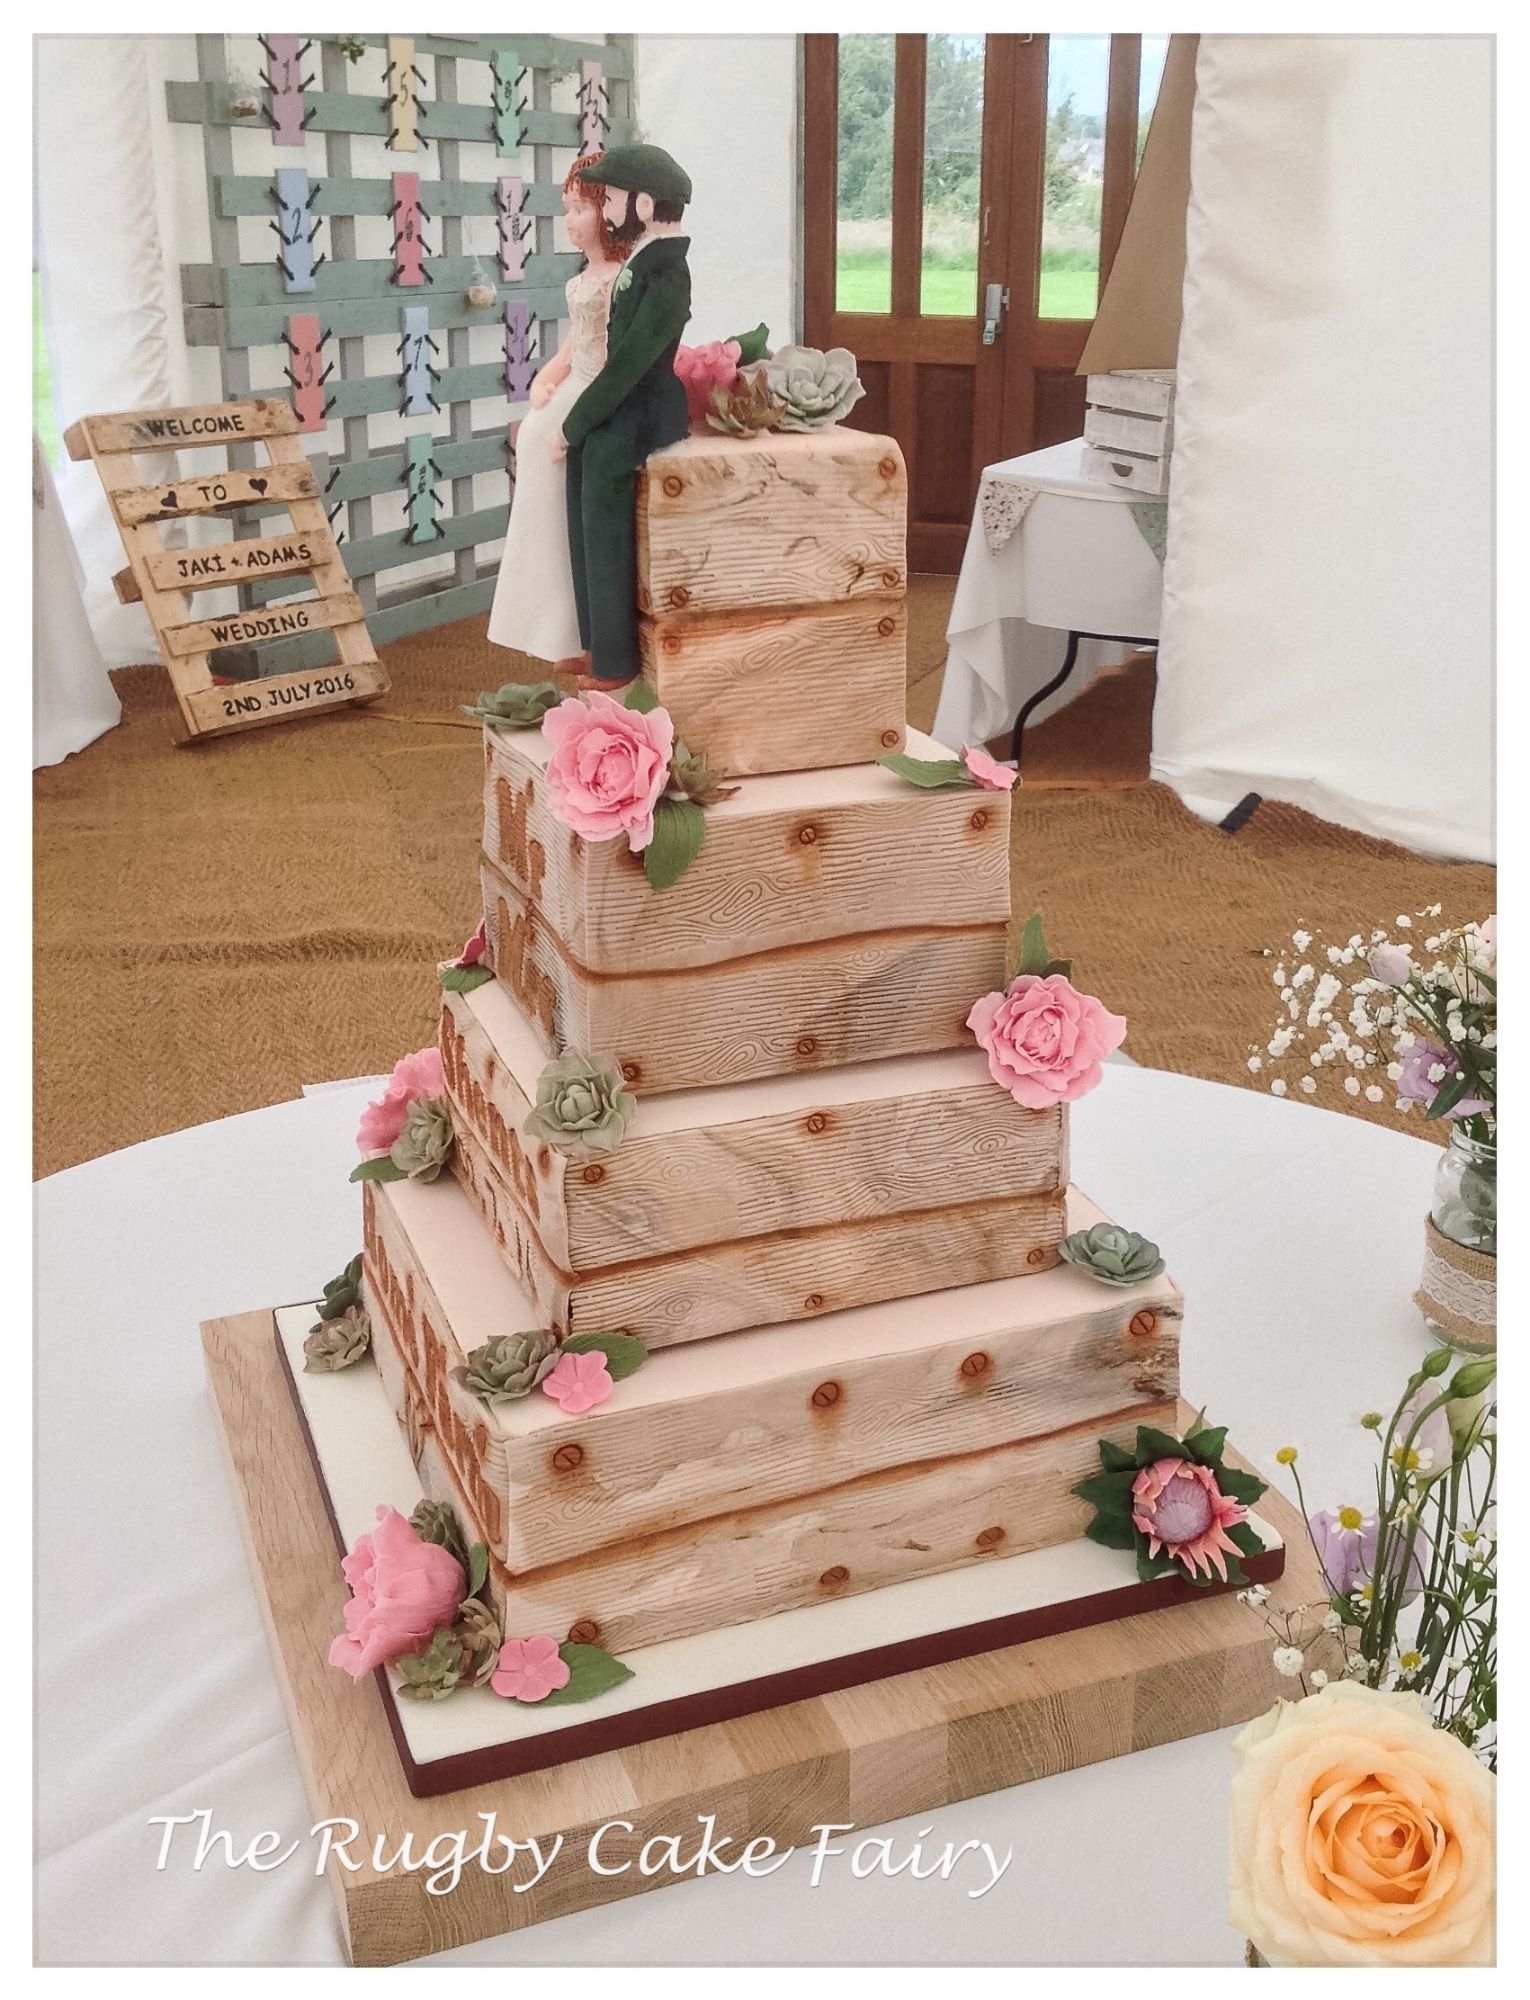 lemon crate wedding cake side image